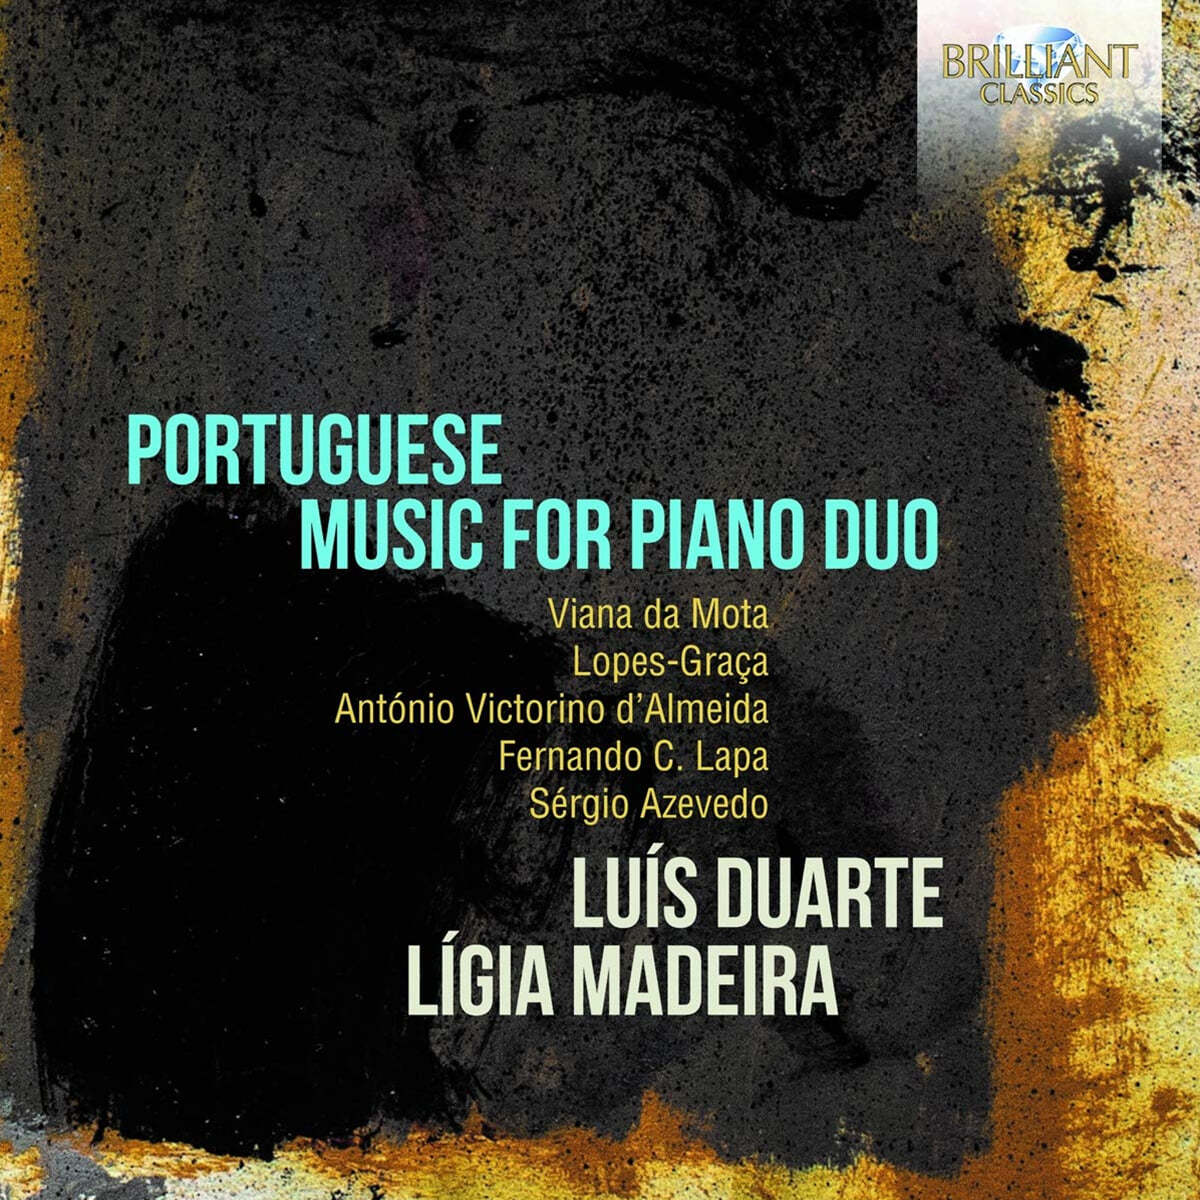 Luis Duarte 피아노 2중주로 연주한 포르투갈 음악 (Portuguese Music for Piano Duo) 